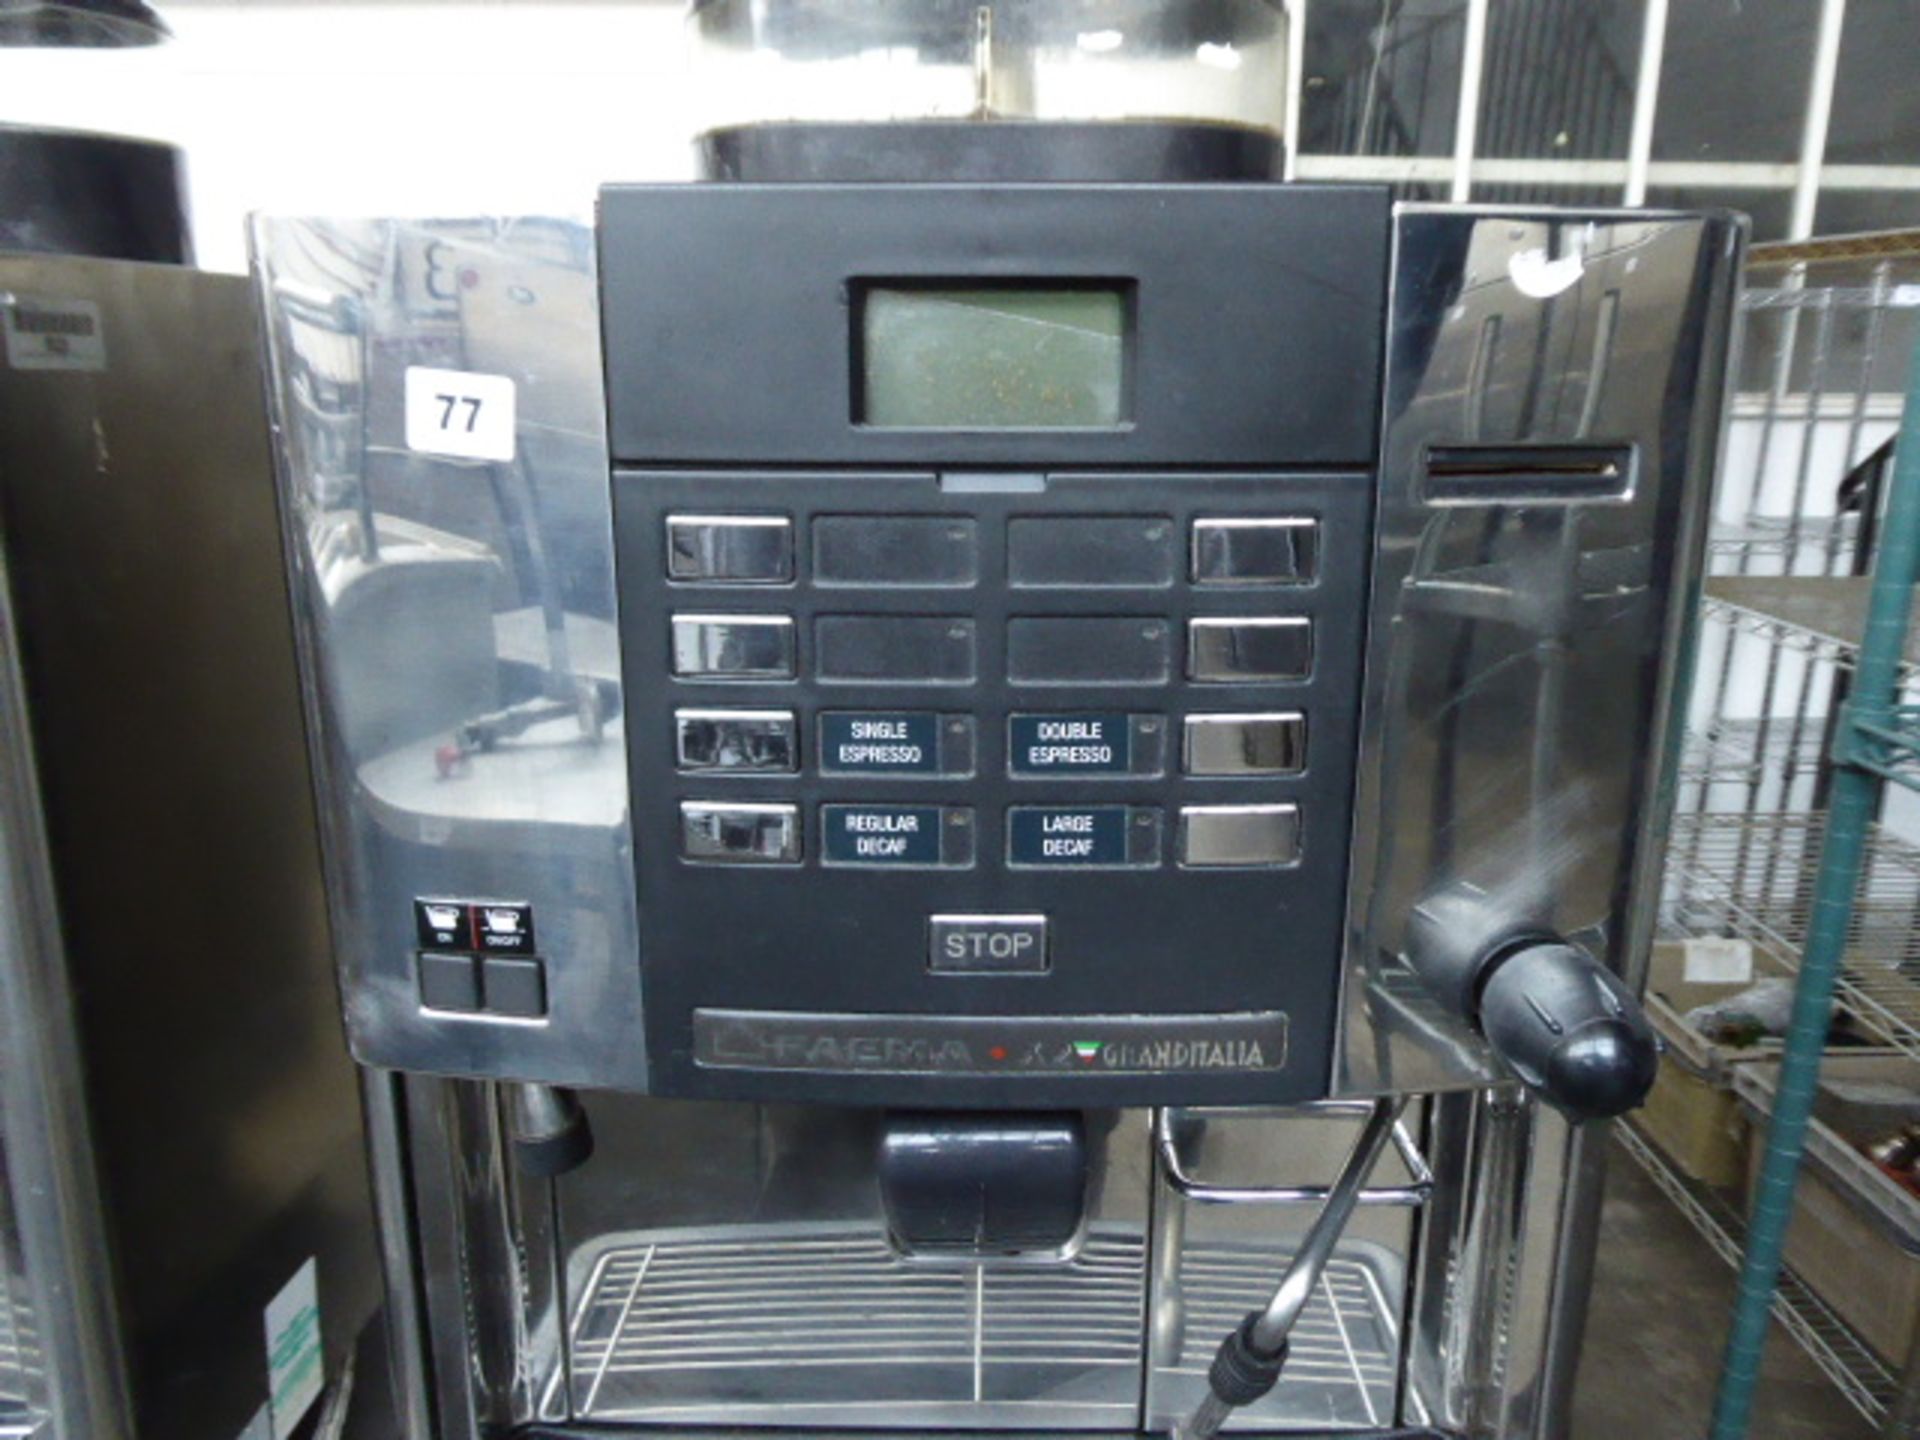 50cm Faema model X2 grand Italia bean to cup automatic coffee machine single phase - Image 2 of 2